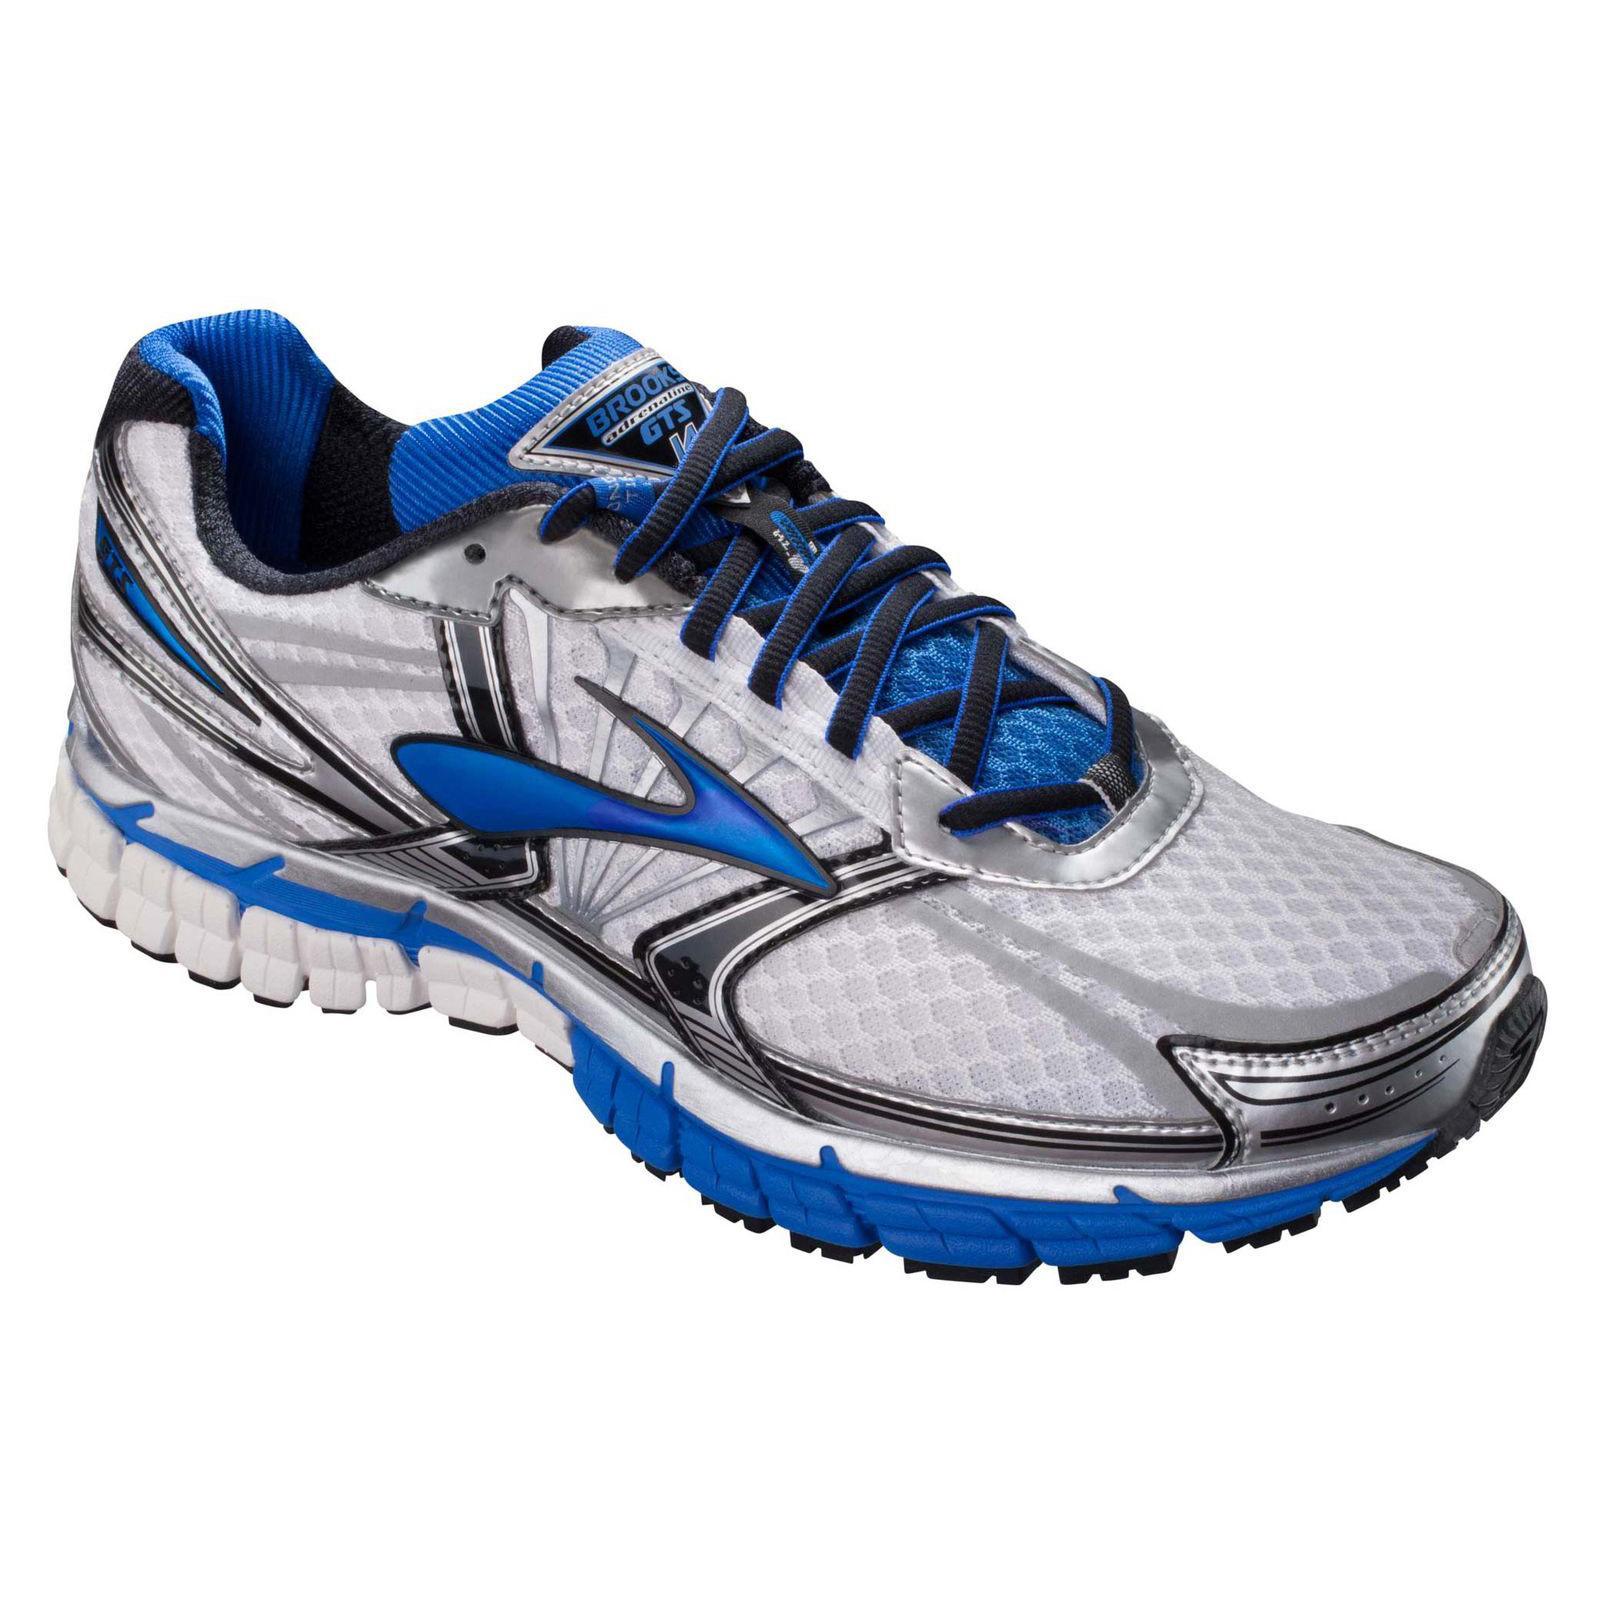 Brooks Mens Adrenaline GTS 14 Running Shoes - Silver/Blue - Tennisnuts.com